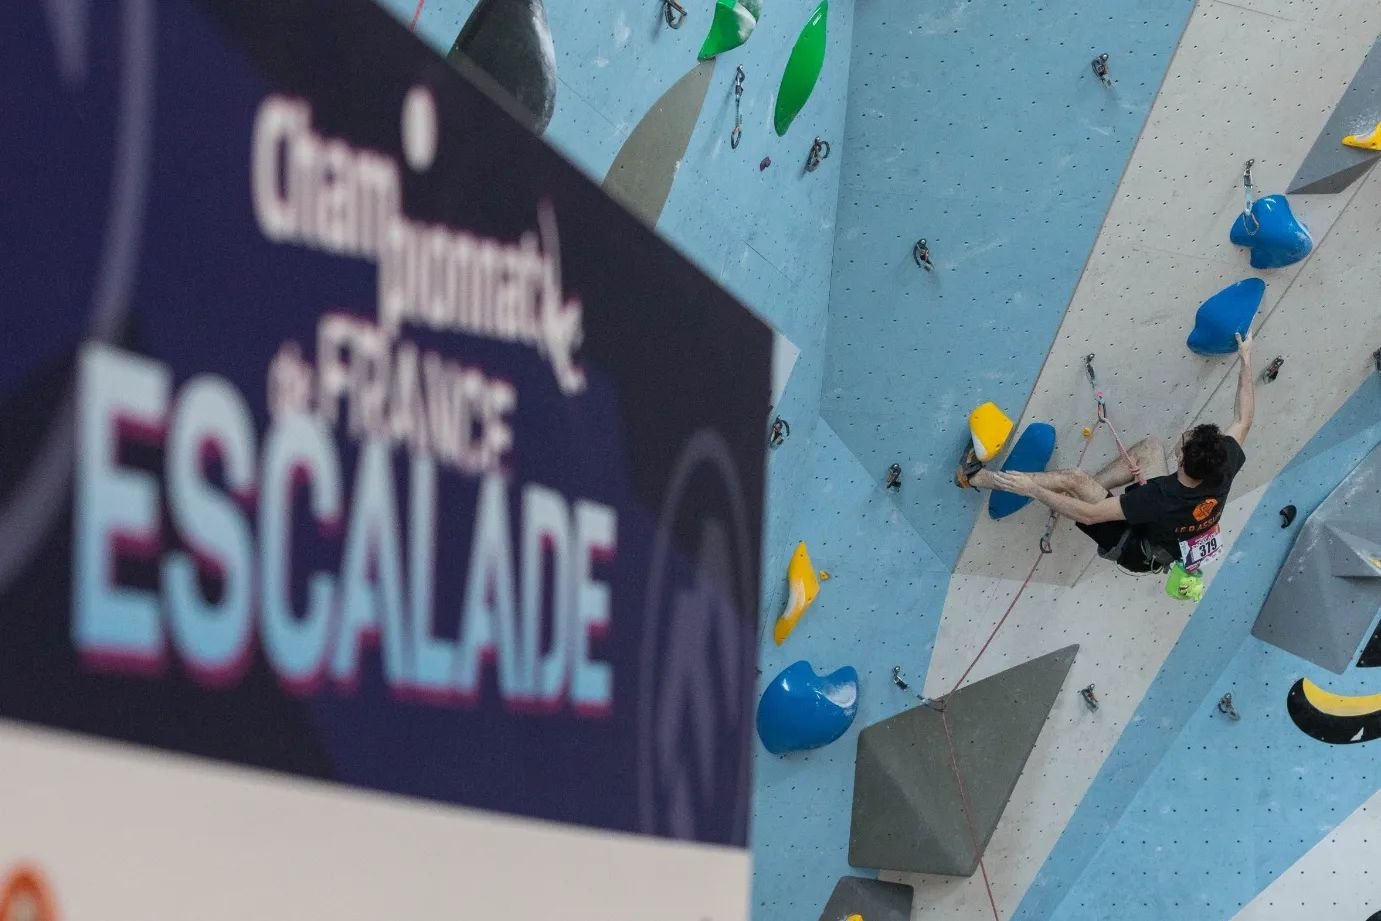 Championnat d'escalade jeune France
Qualifications @ffmontagne_escalade &agrave; @entretempsescalade 🧗🦎

@villebesancon #escalade #sportclimbing #difficult&eacute; #topelite